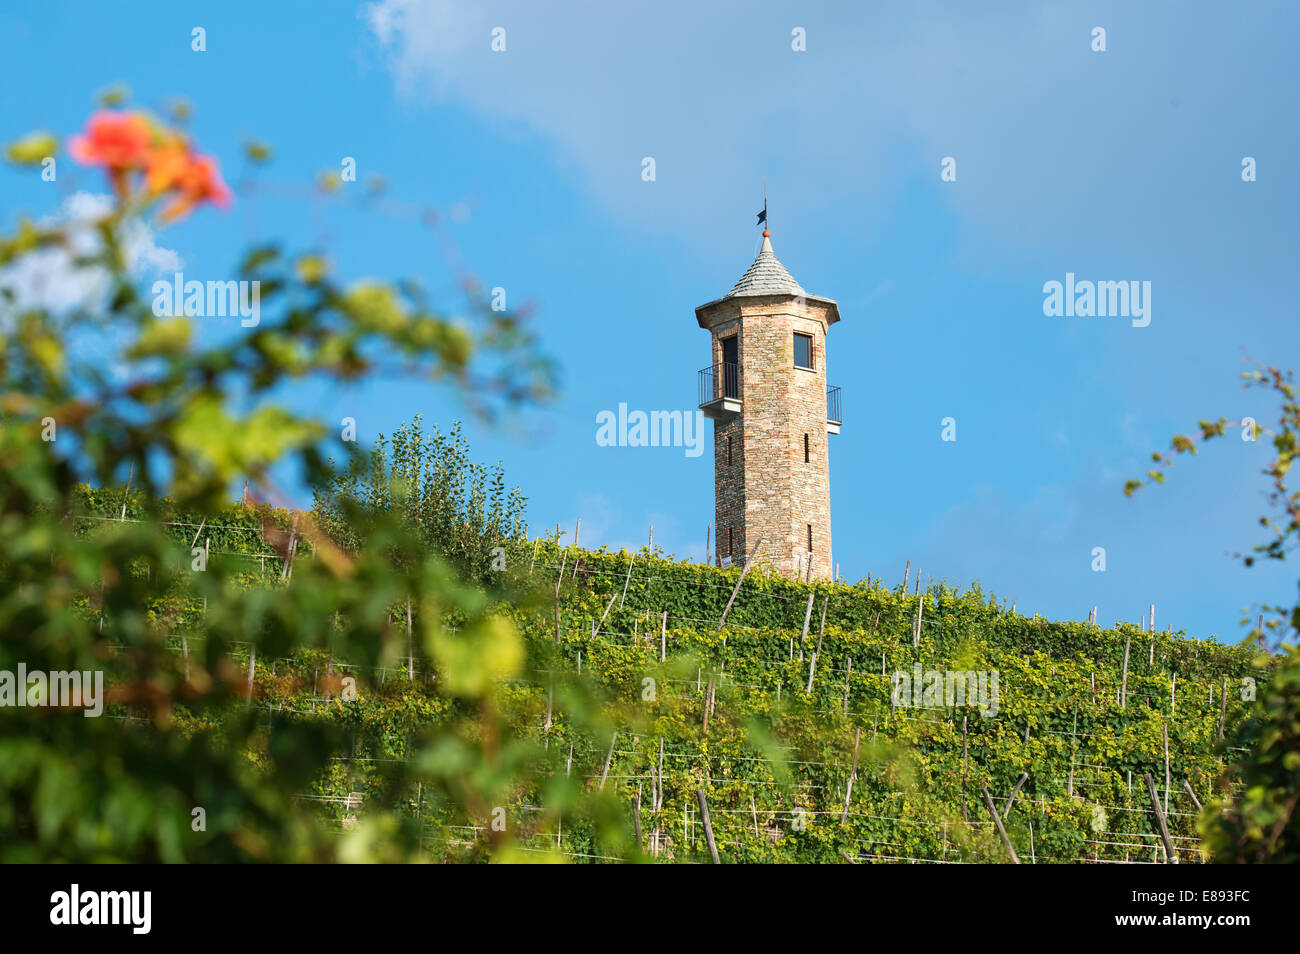 Italia,los viñedos de Piamonte: Langhe-Roero y Monferrato en la Lista del Patrimonio Mundial de la UNESCO.La Torre dei Contini de Canelli,Asti Foto de stock